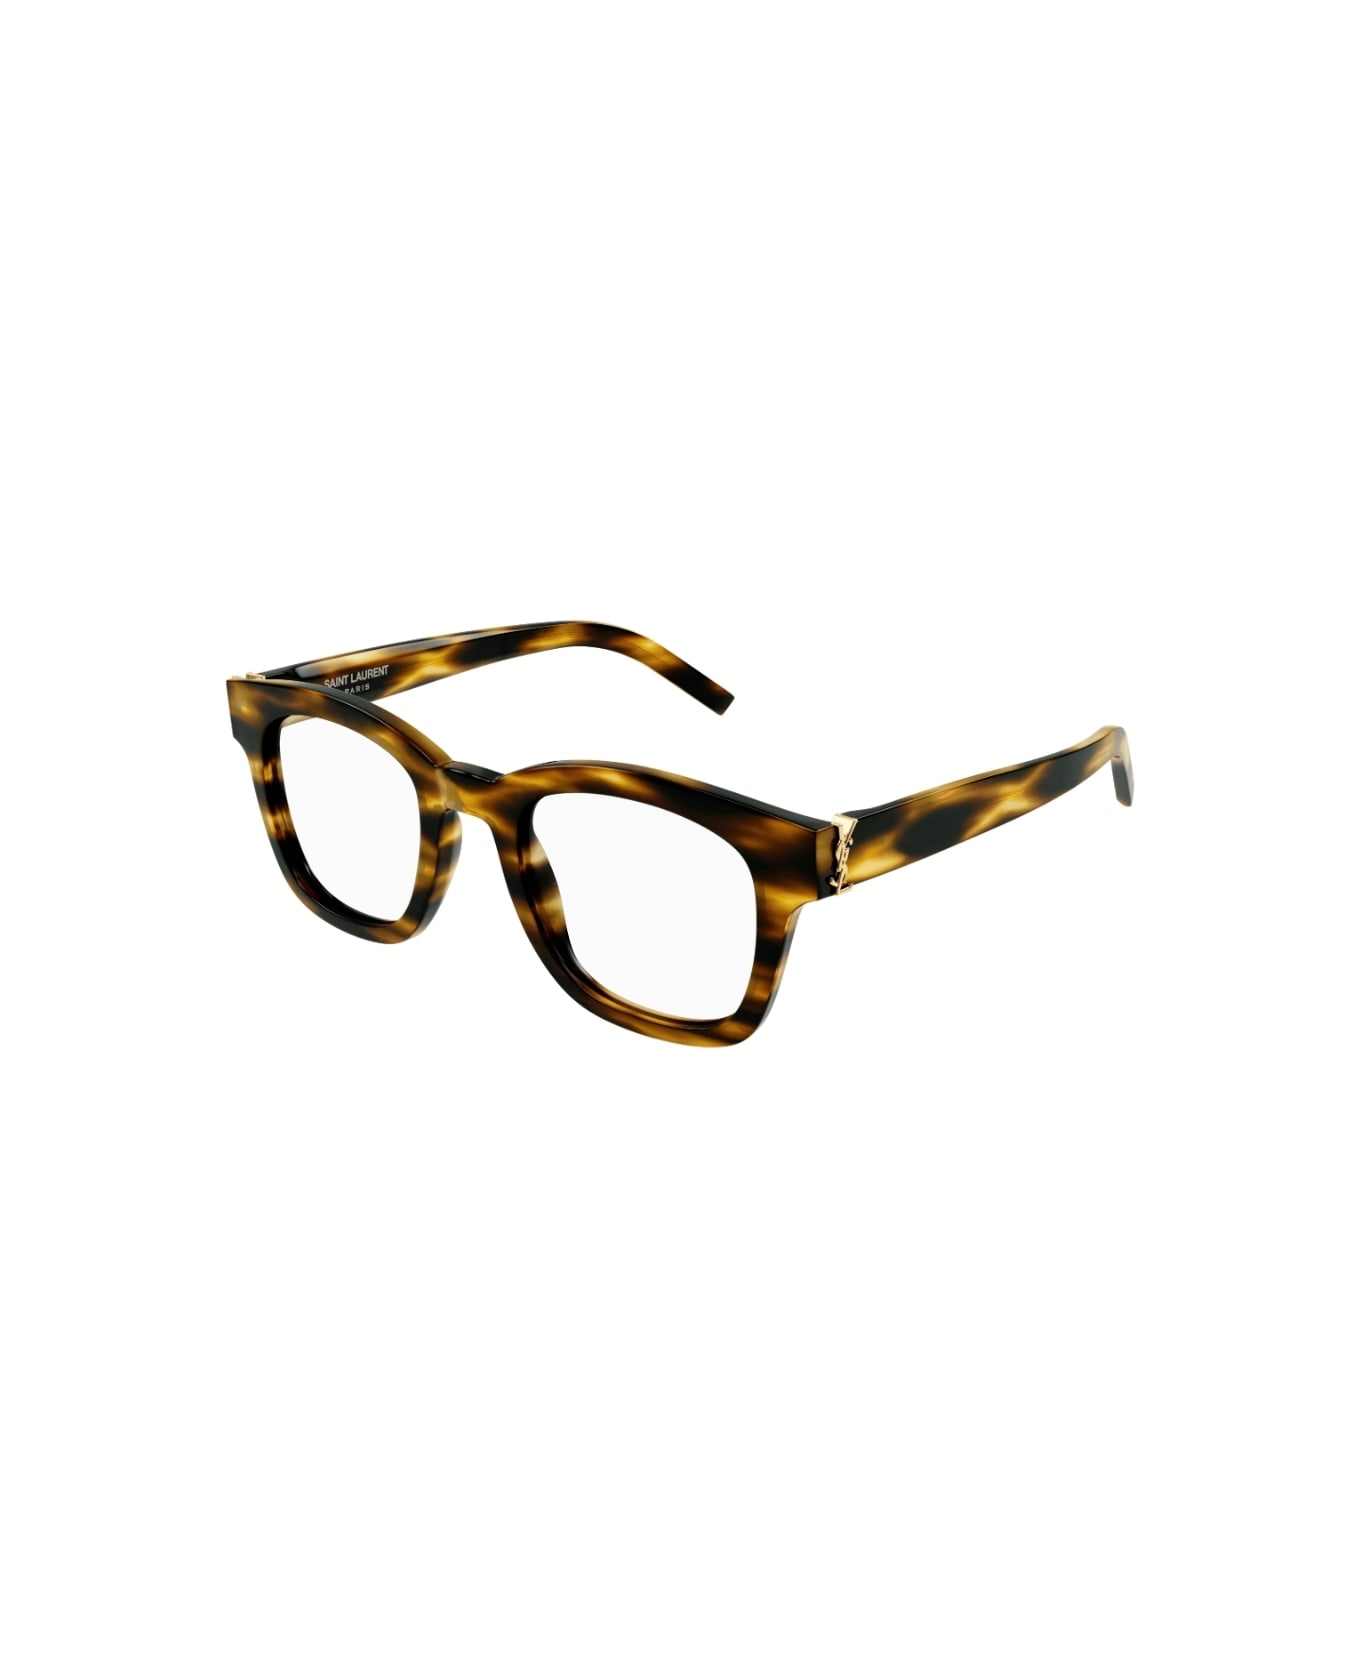 Saint Laurent Eyewear SL M124 003 Glasses アイウェア